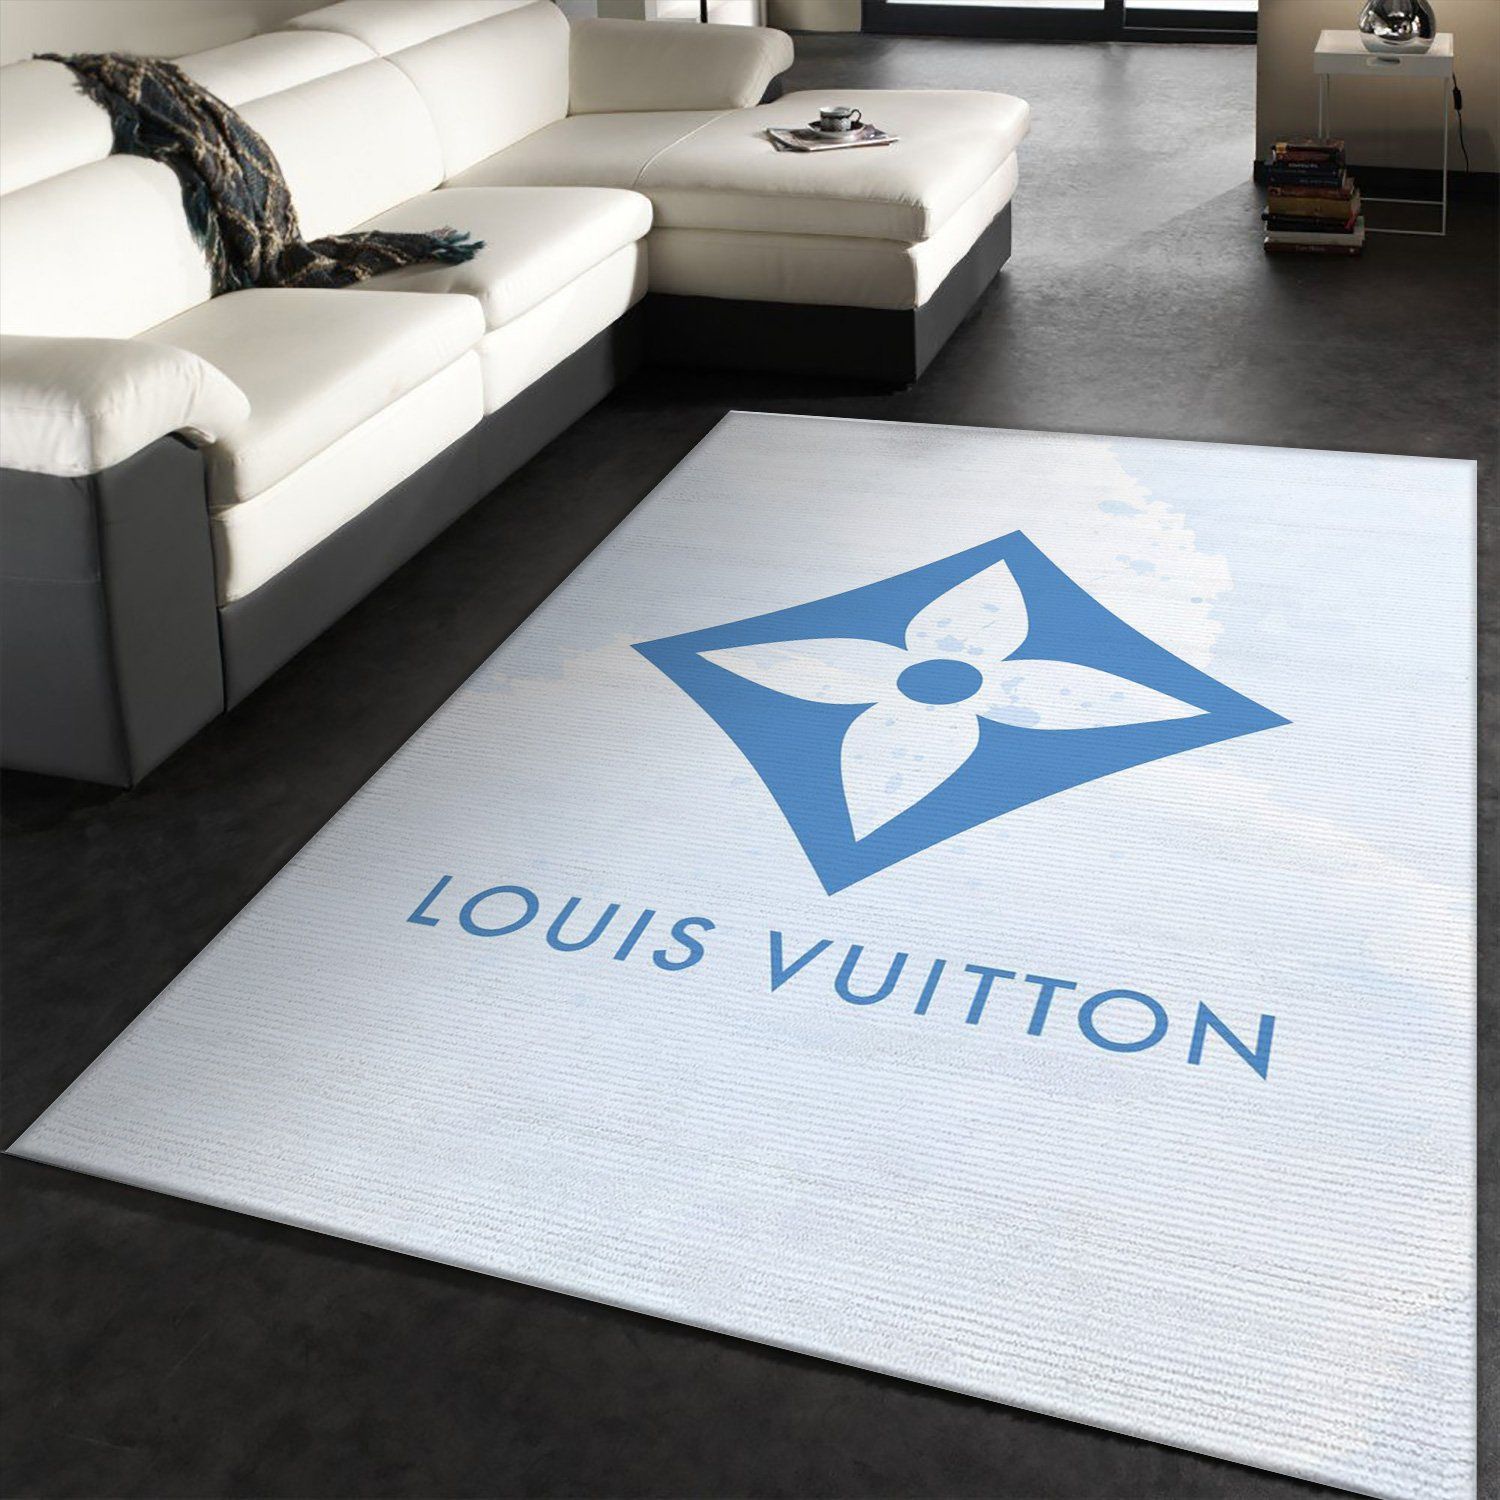 Louis Vuitton Rug Bedroom Rug Decor